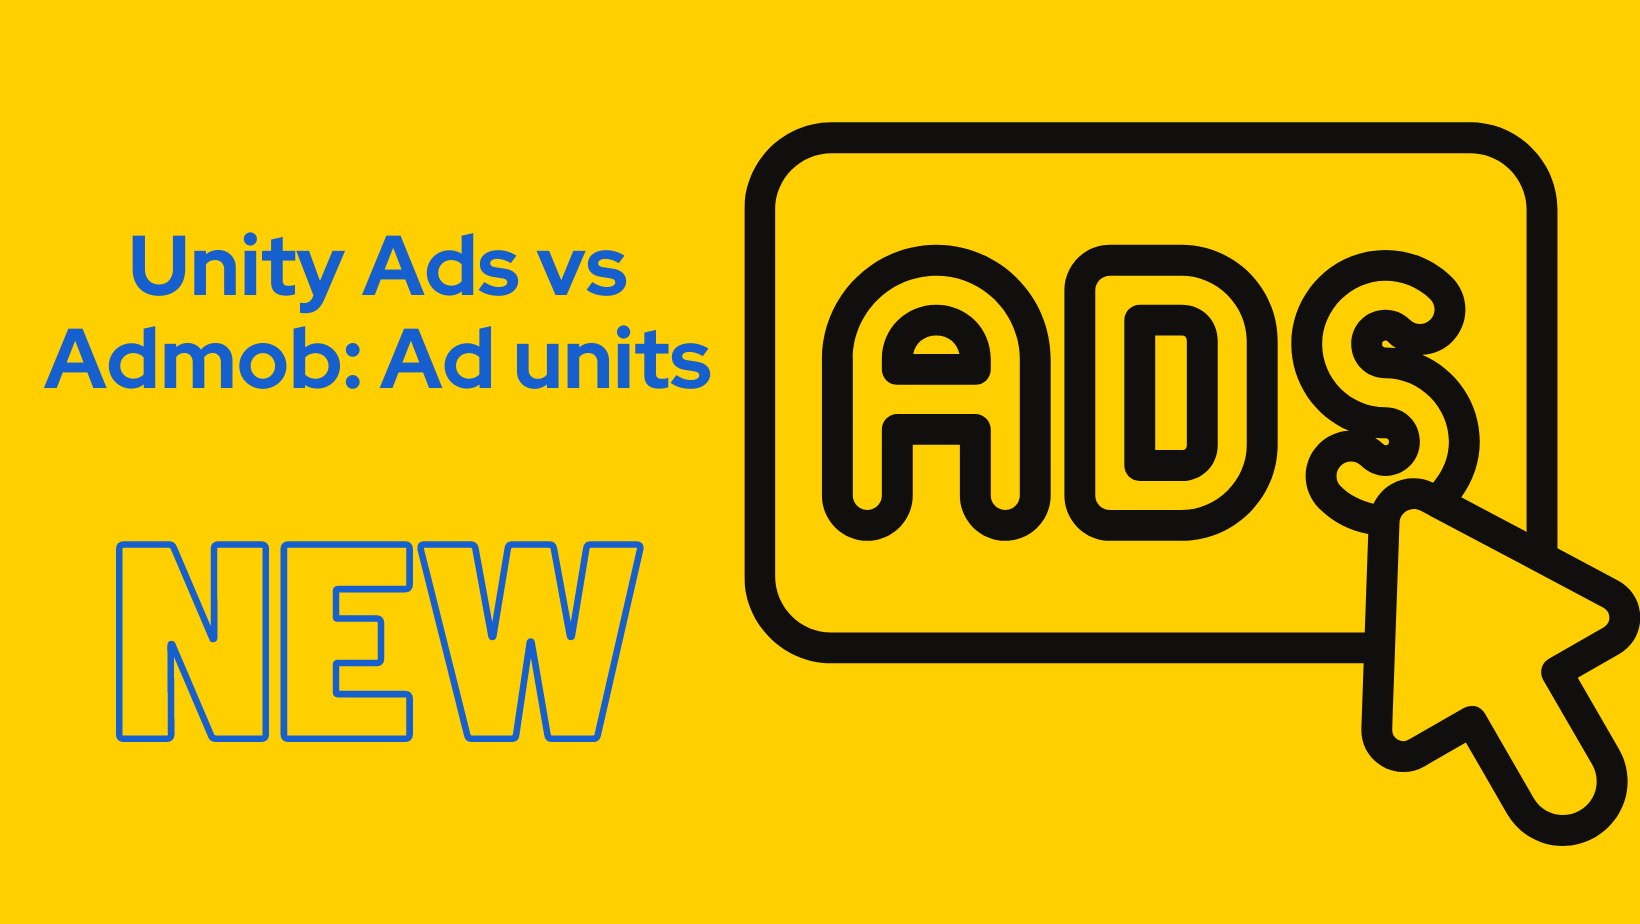 Unity Ads vs Admob